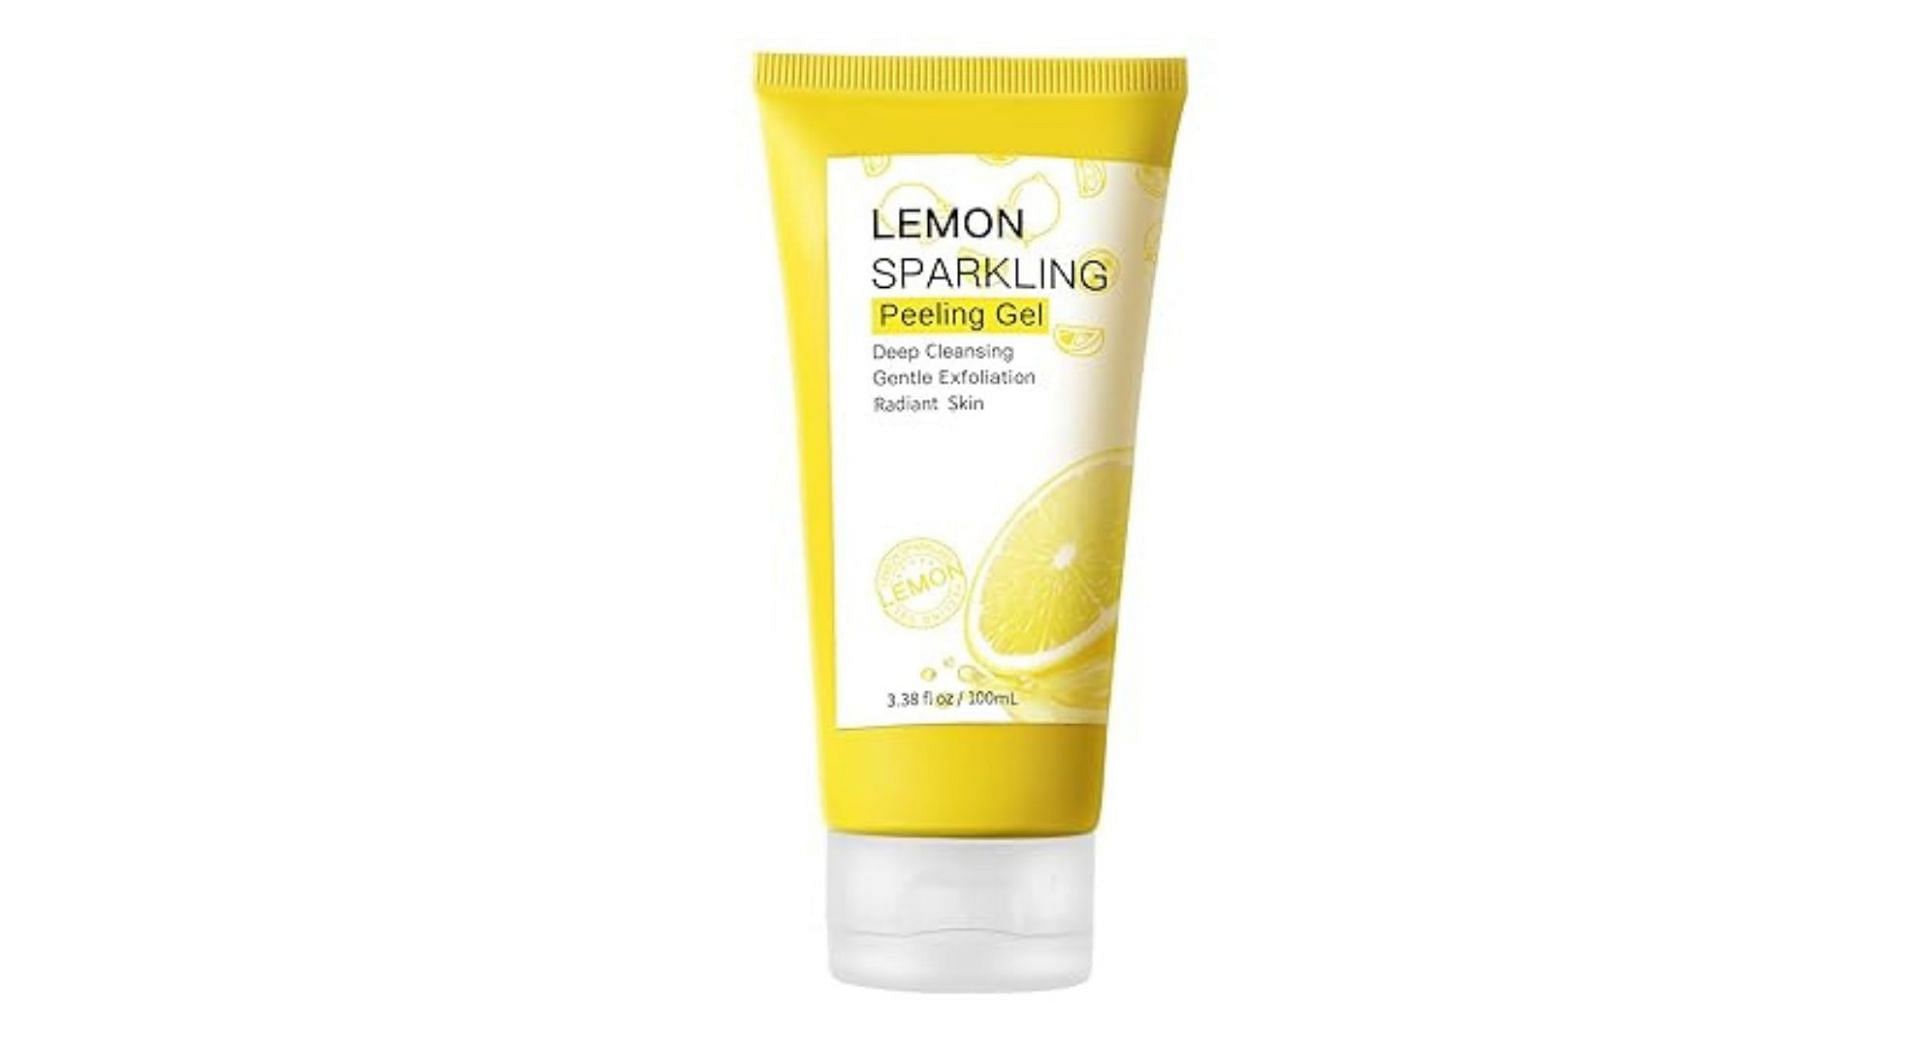 Mooyam Lemon Sparkling peeling gel (Image via Mooyam)